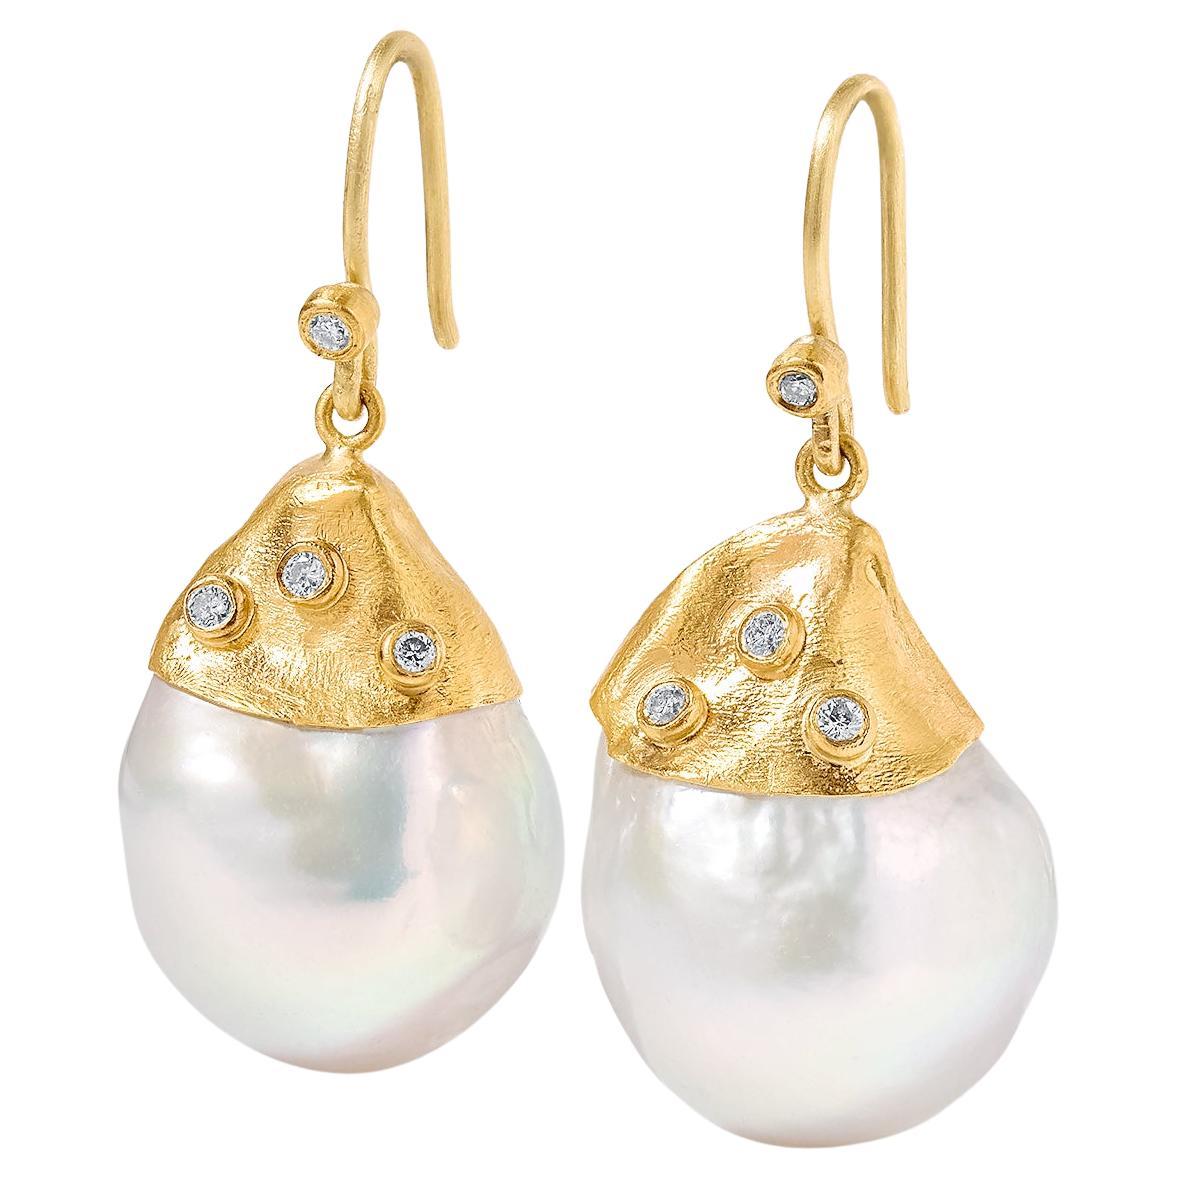 Grandes boucles d'oreilles en or 24 carats avec perles baroques blanches de 54 carats et diamants